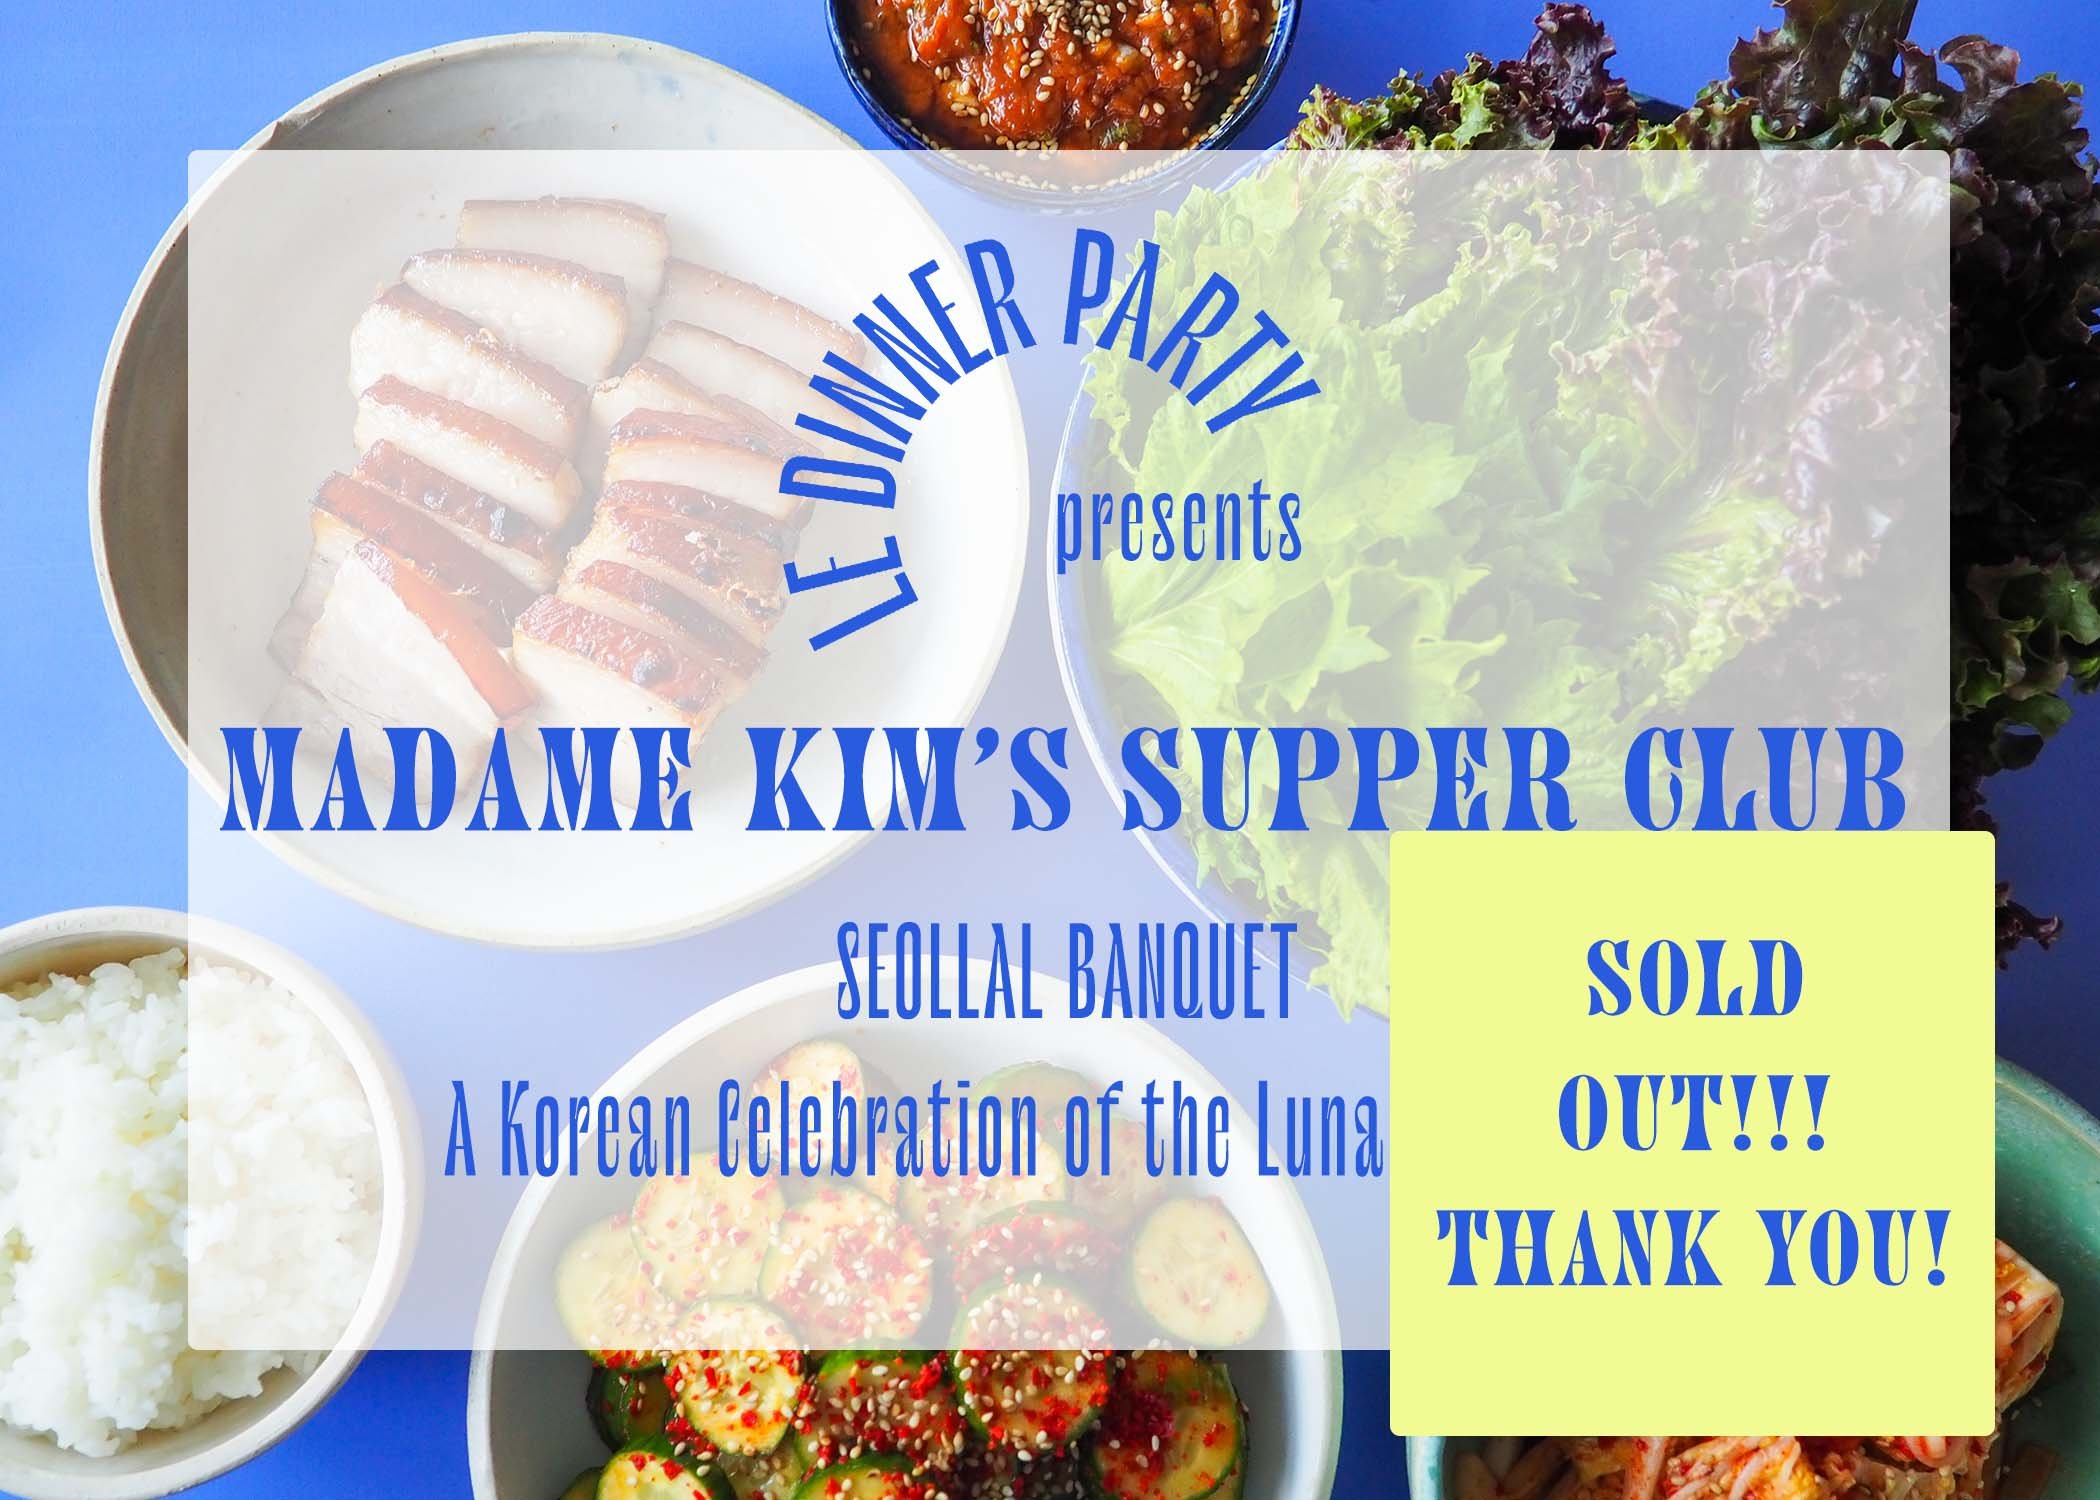 Madame Kim's Supper Club Seollal Banquet for the Lunar New Year